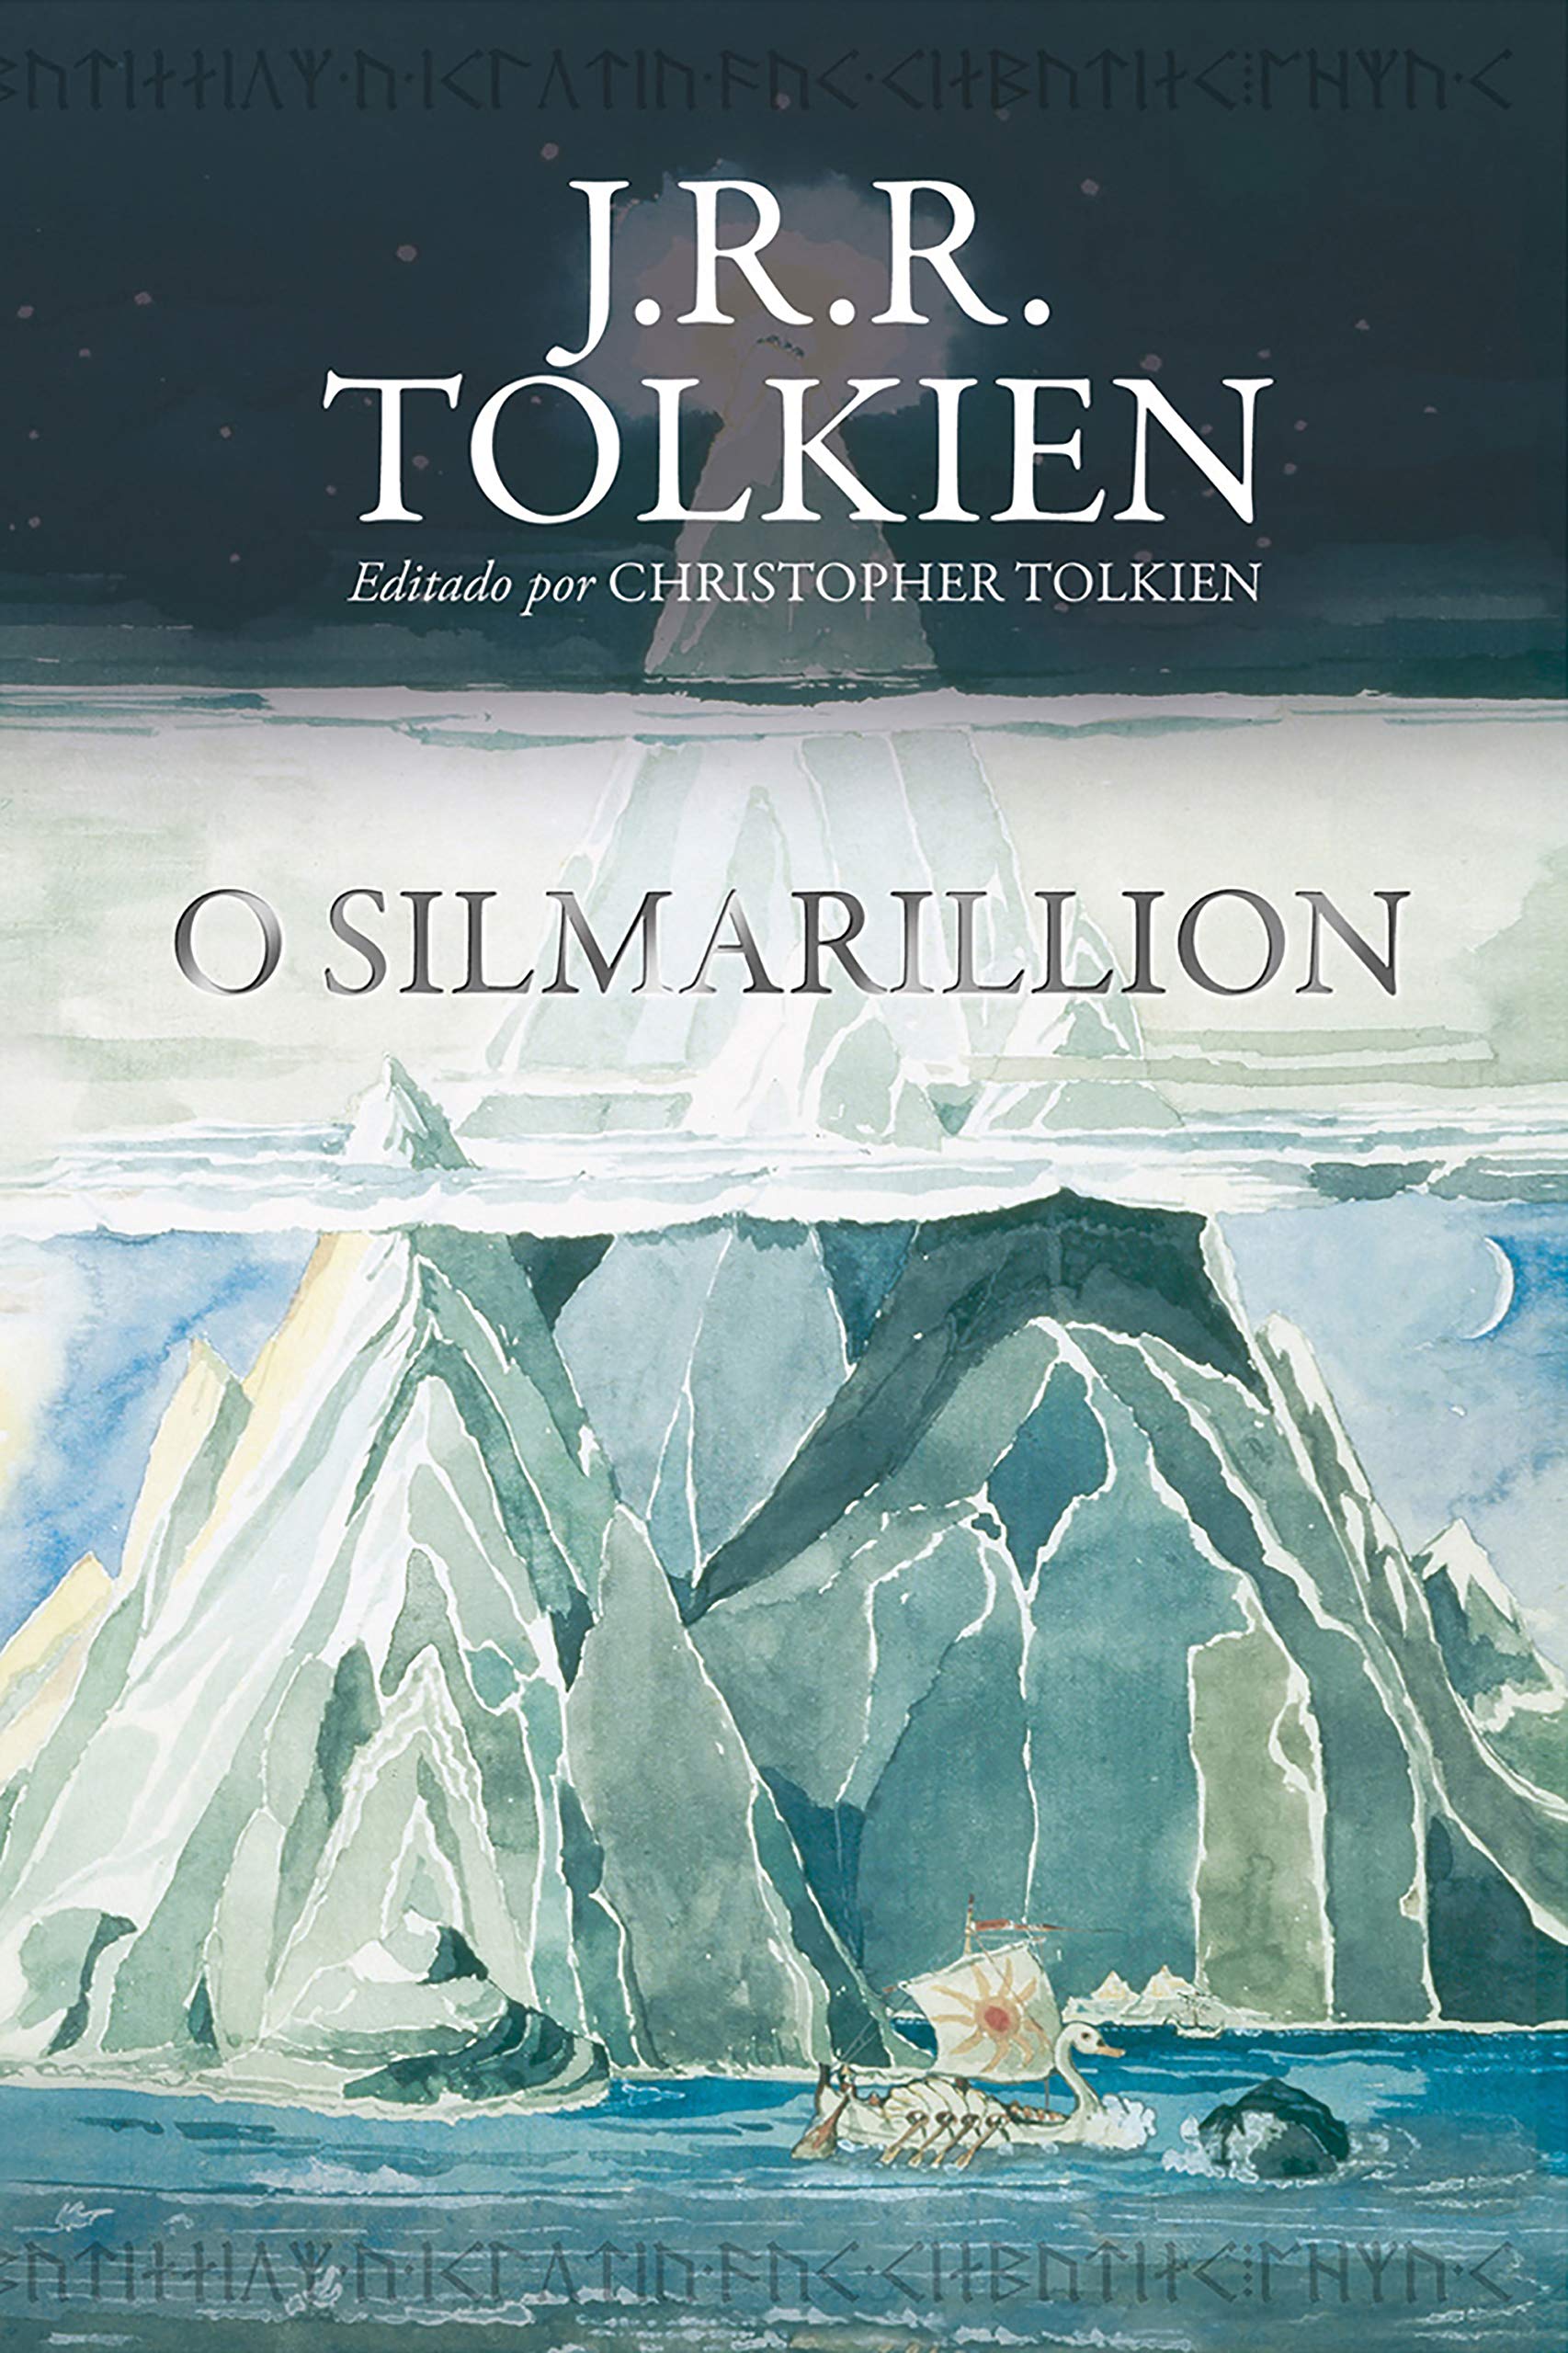 J.R.R. Tolkien, invalid author ID: O Silmarillion (Hardcover, Portuguese language, 2019, HarperCollins Brasil)